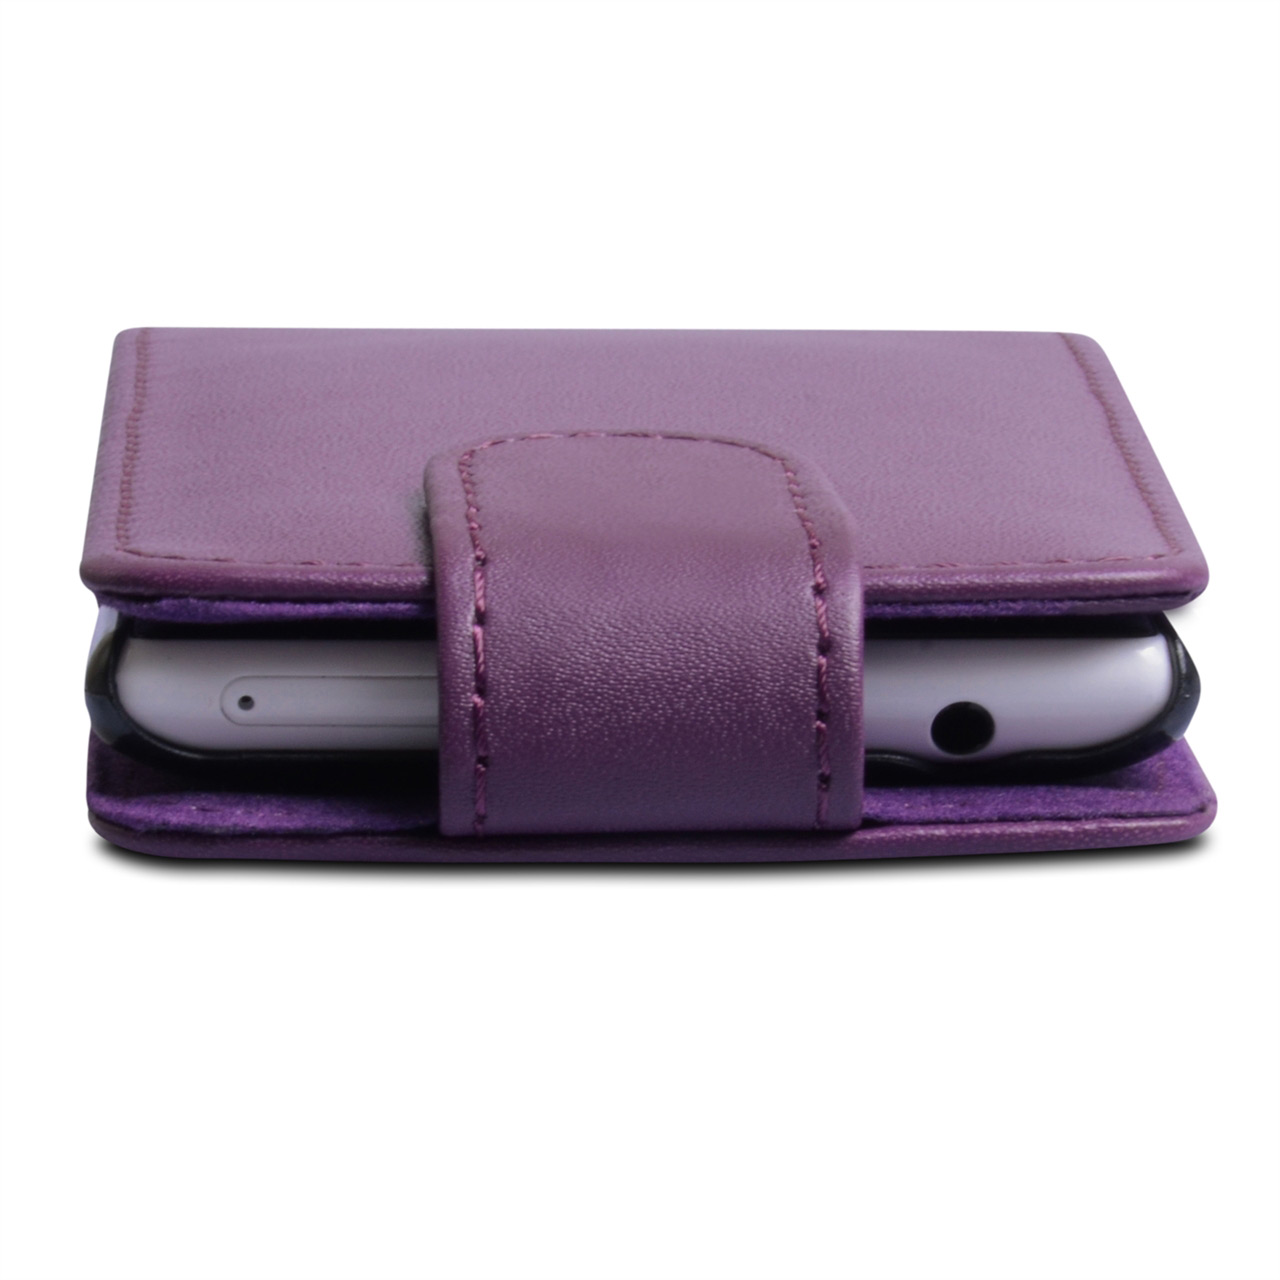 YouSave Accessories Nokia Lumia 720 Leather Effect Flip Case - Purple